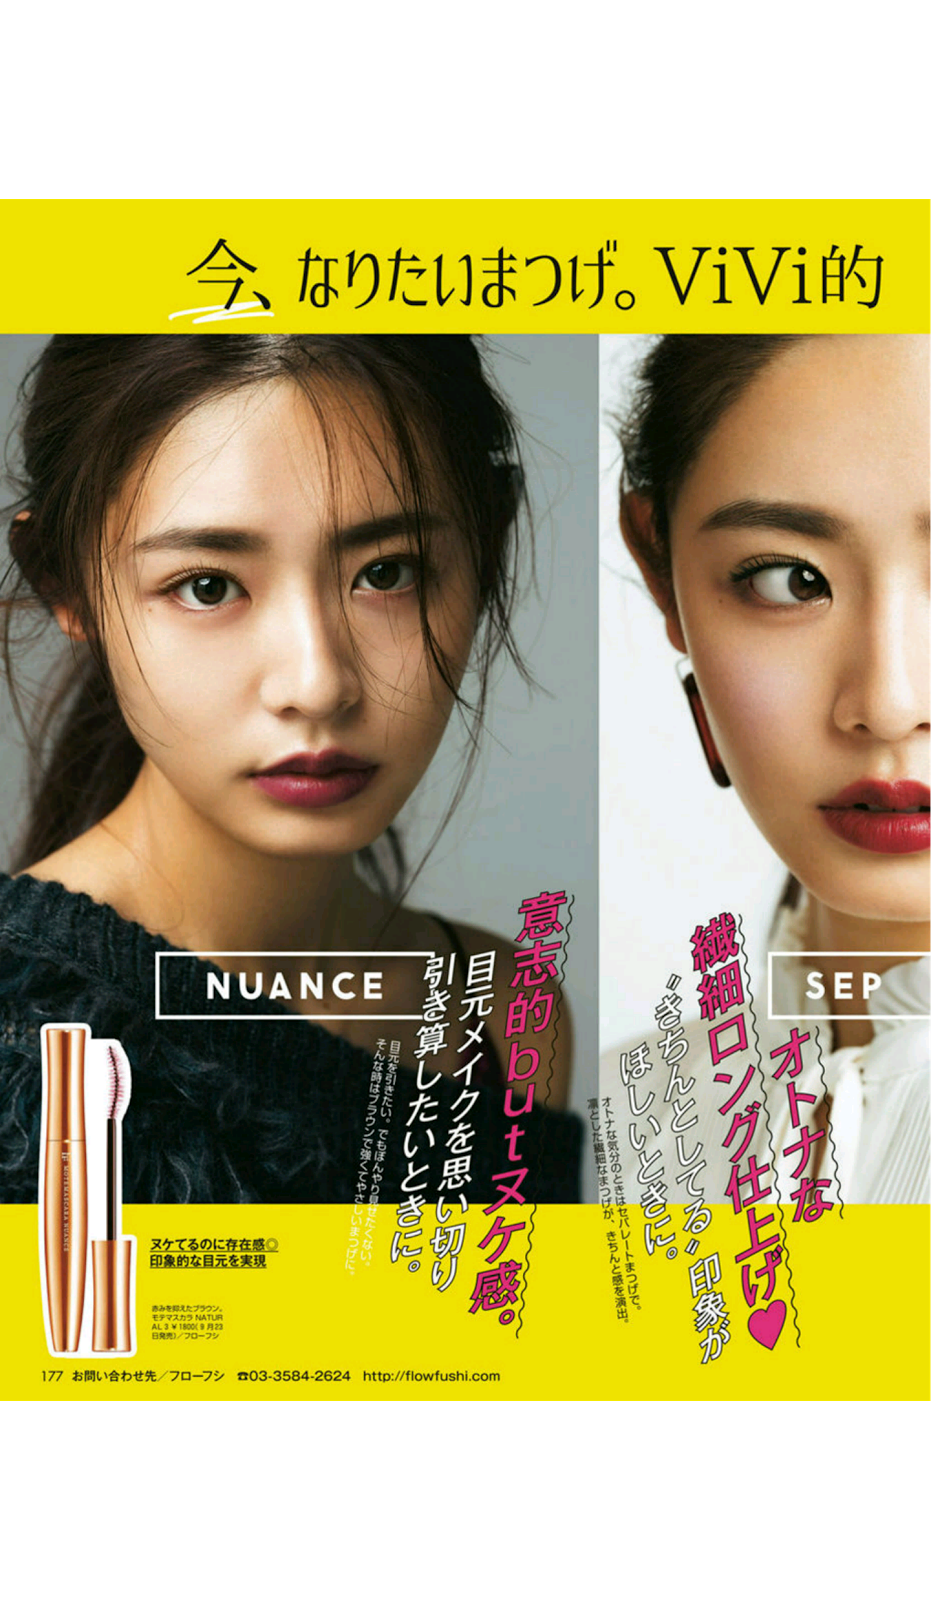 Vivi November 2017 Issue [Japanese Magazine Scans] - Beauty by Rayne